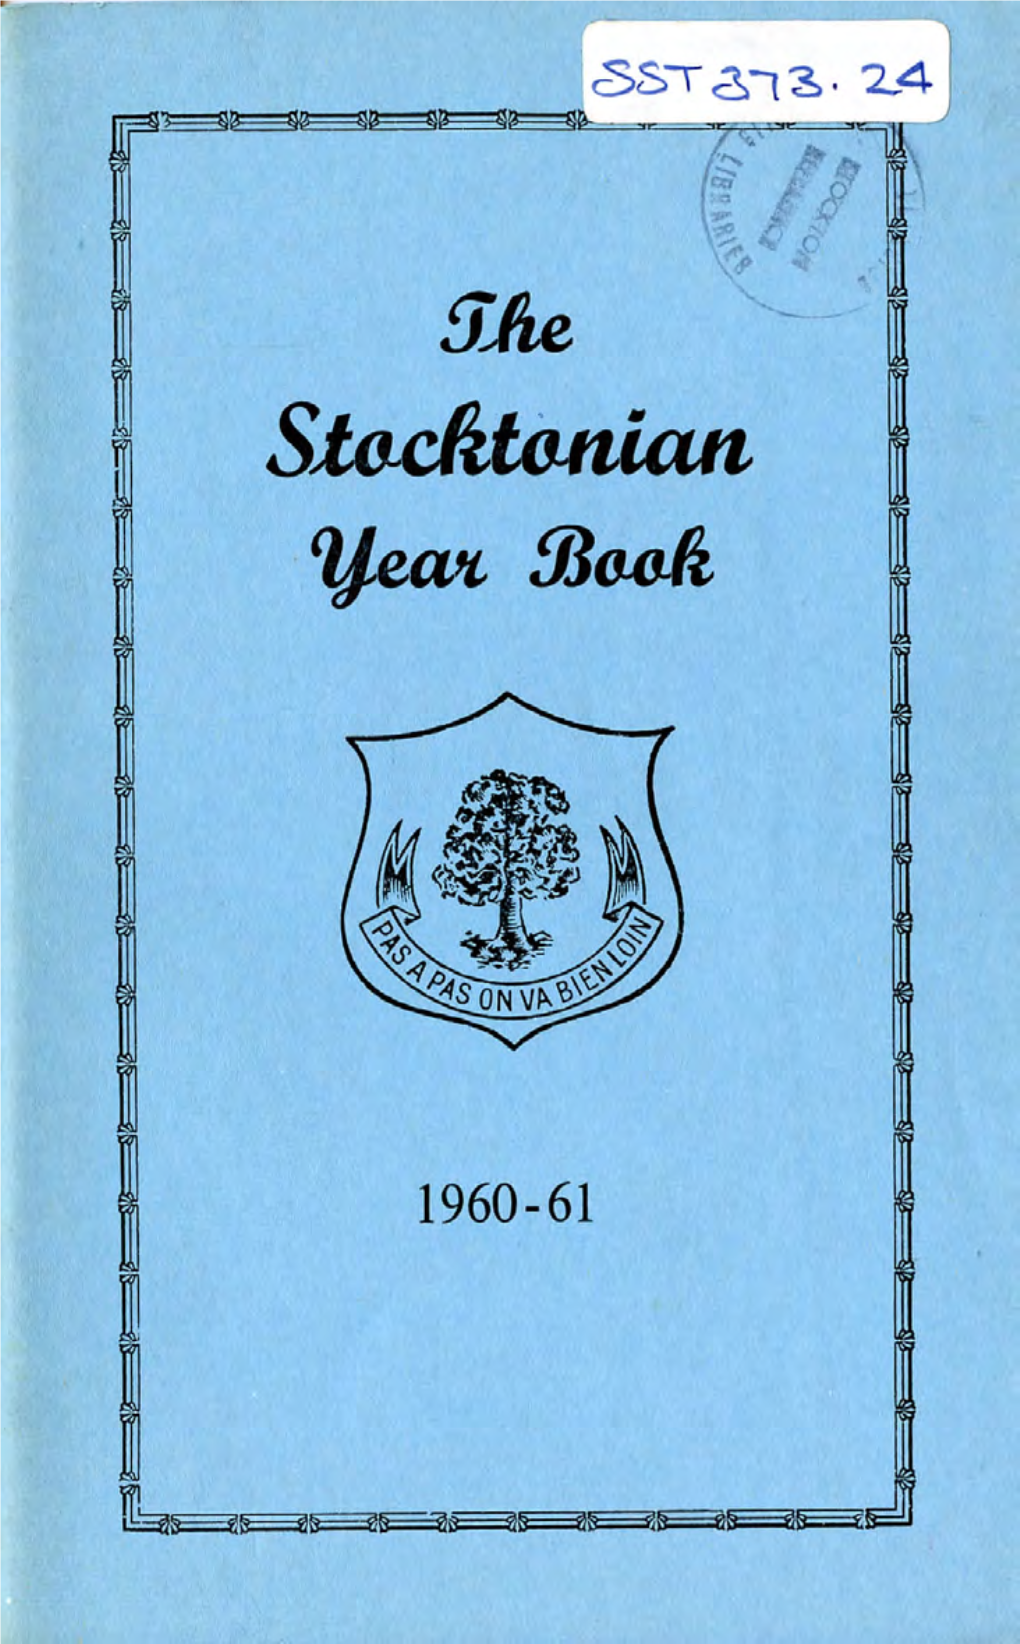 Stocktonian 1960-1961